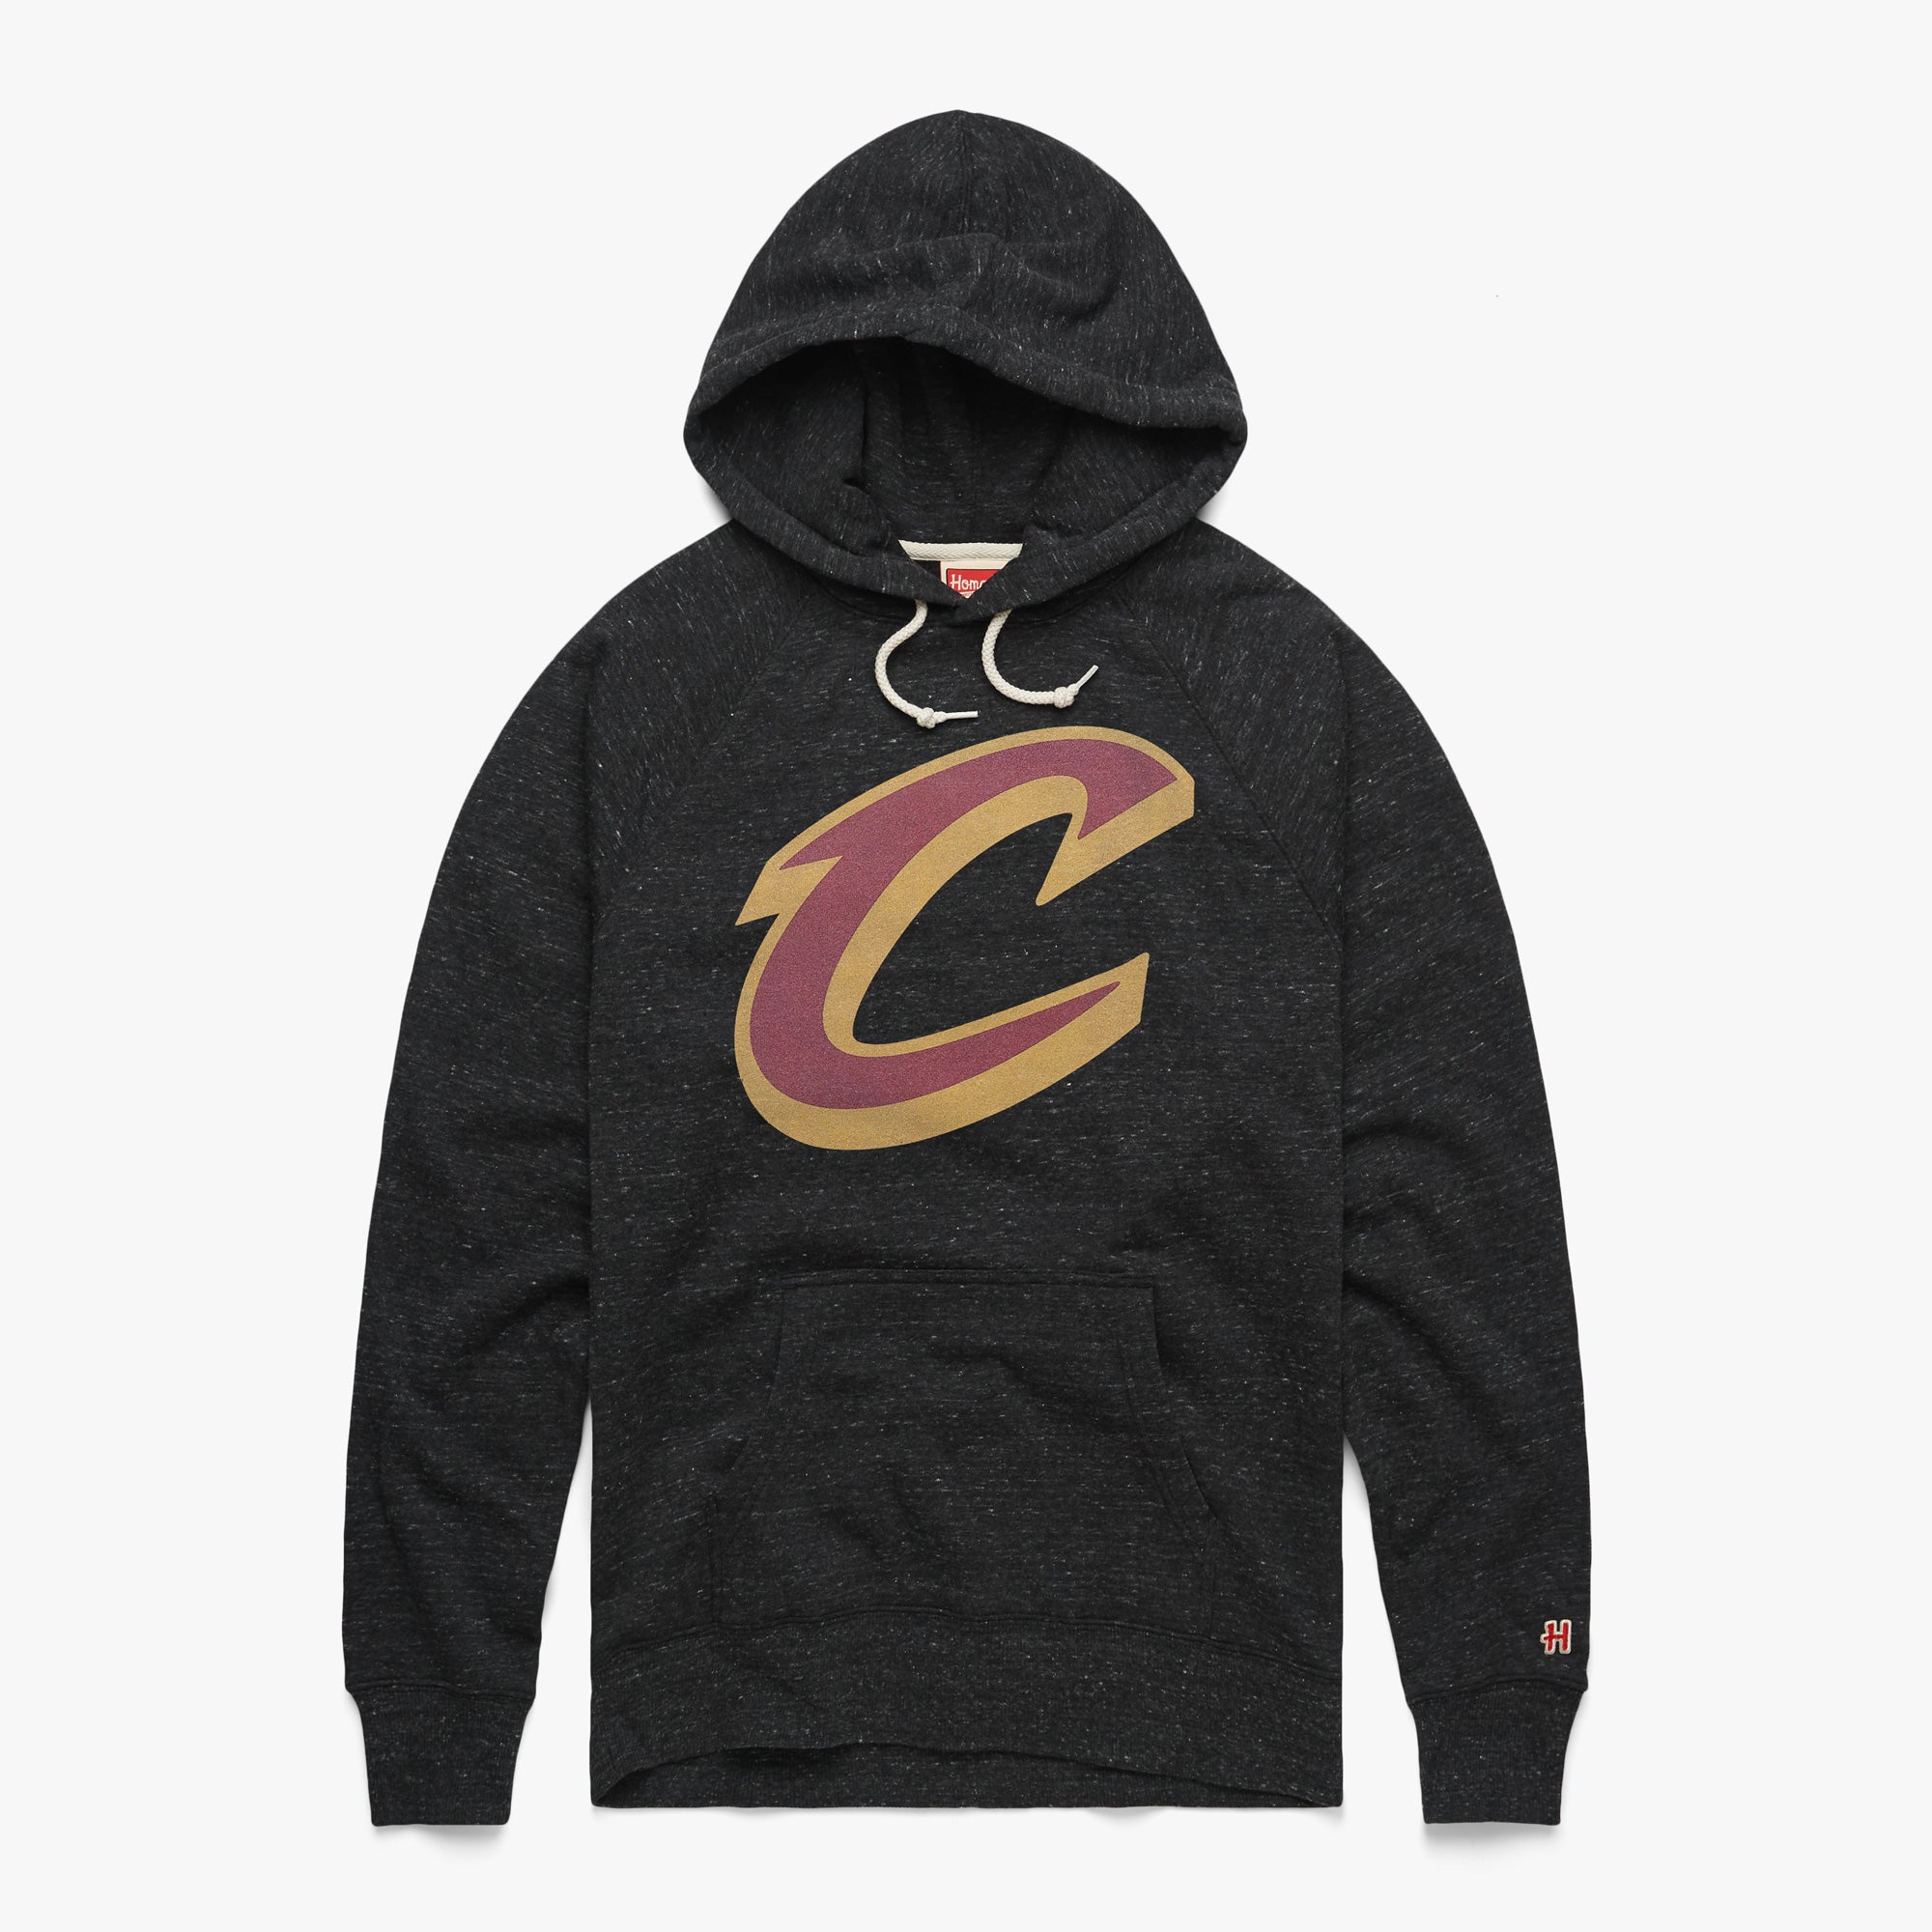 Official Cleveland Cavaliers Hoodies, Cavaliers Sweatshirts